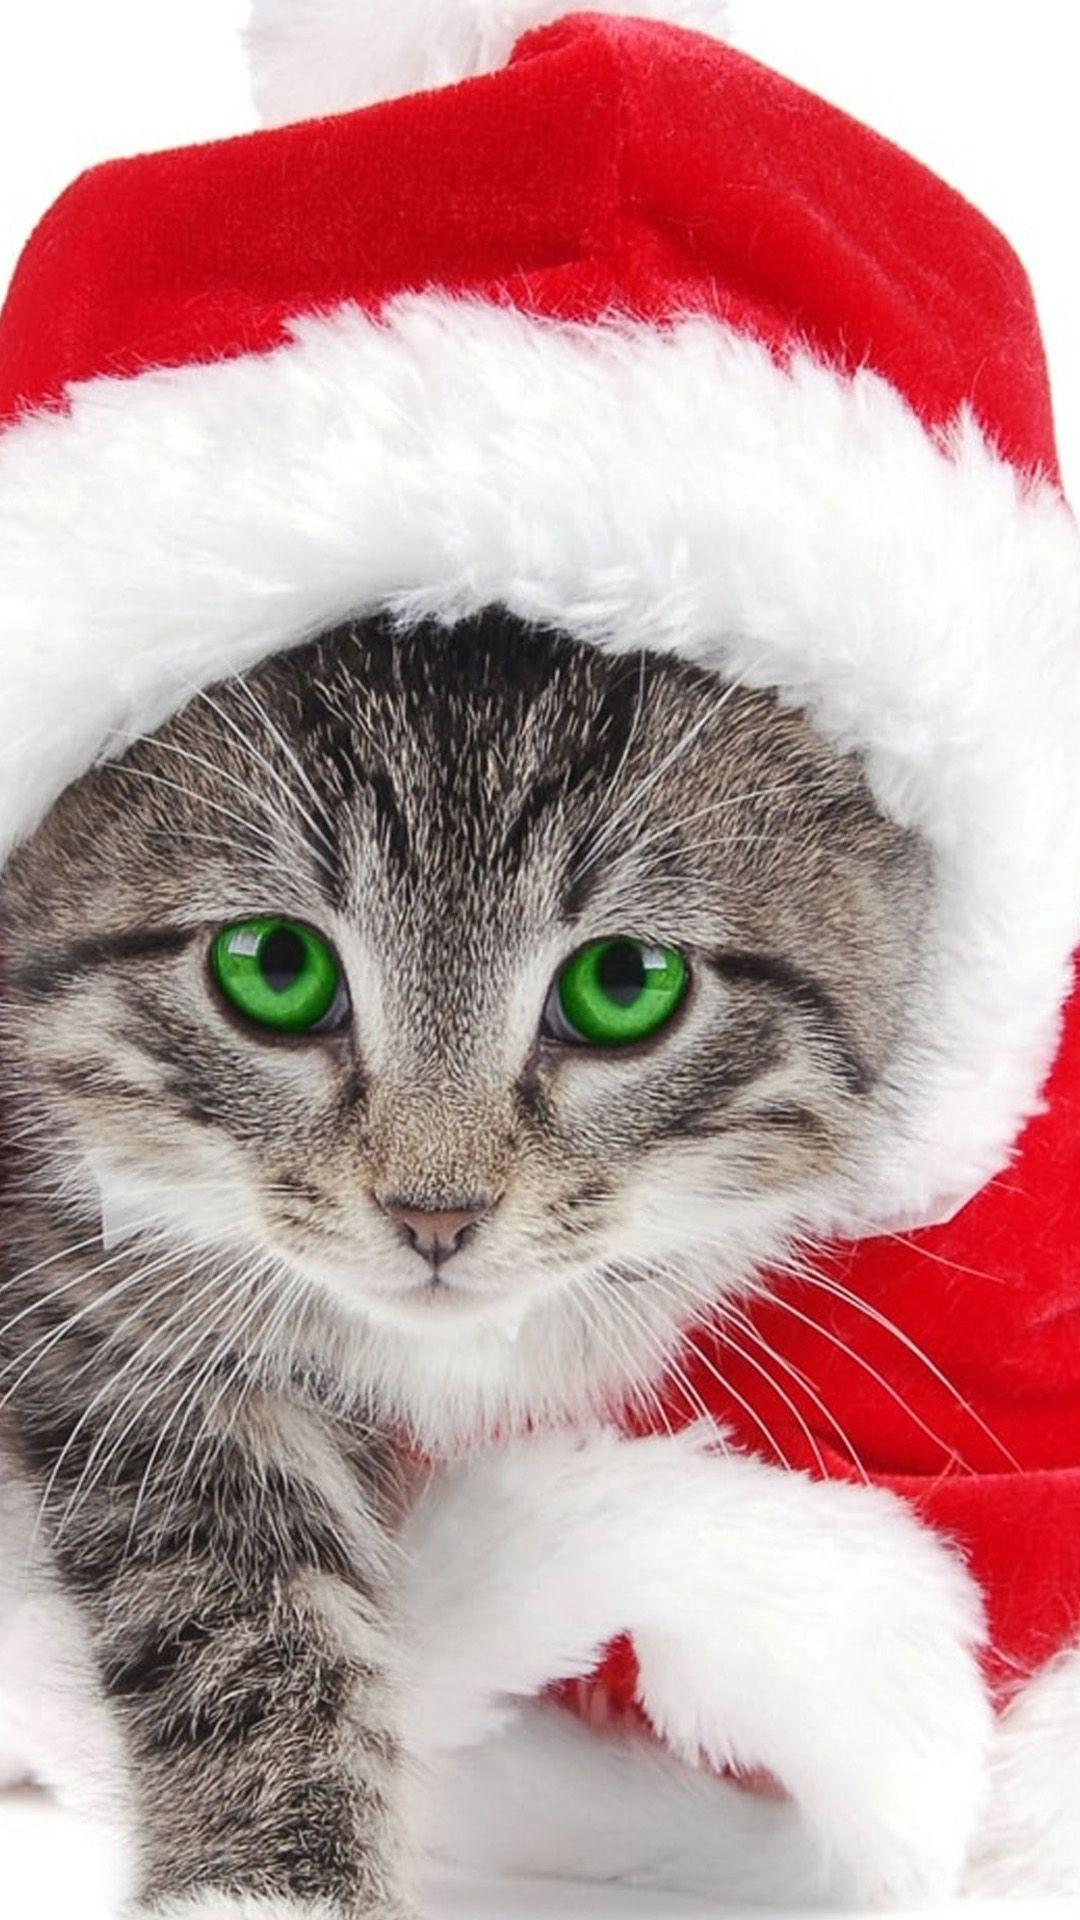 Christmas Cat Samsung Wallpaper, Samsung Galaxy S Galaxy S Galaxy Note 3 Wallpaper. Christmas kitten, Christmas cats, Cat wallpaper